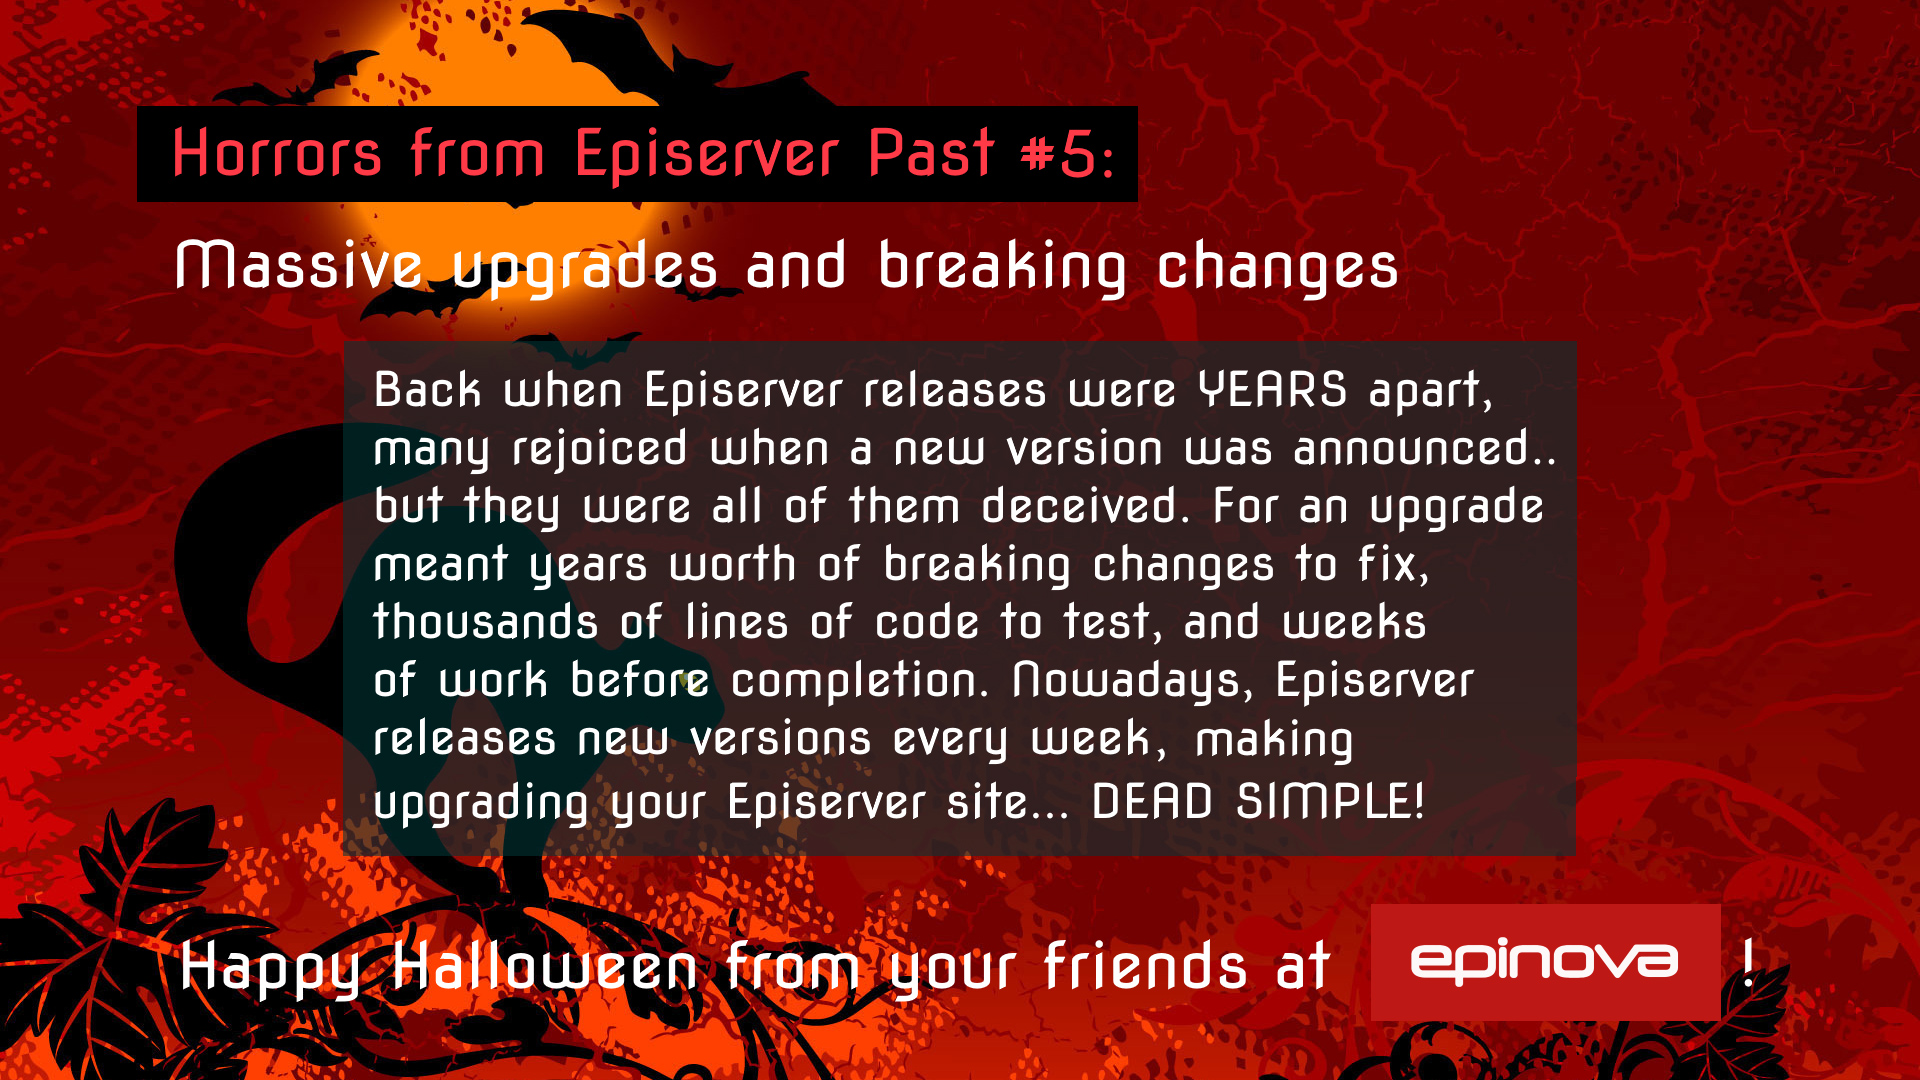 Humorous Halloween throwback to Episerver's old upgrade cycle